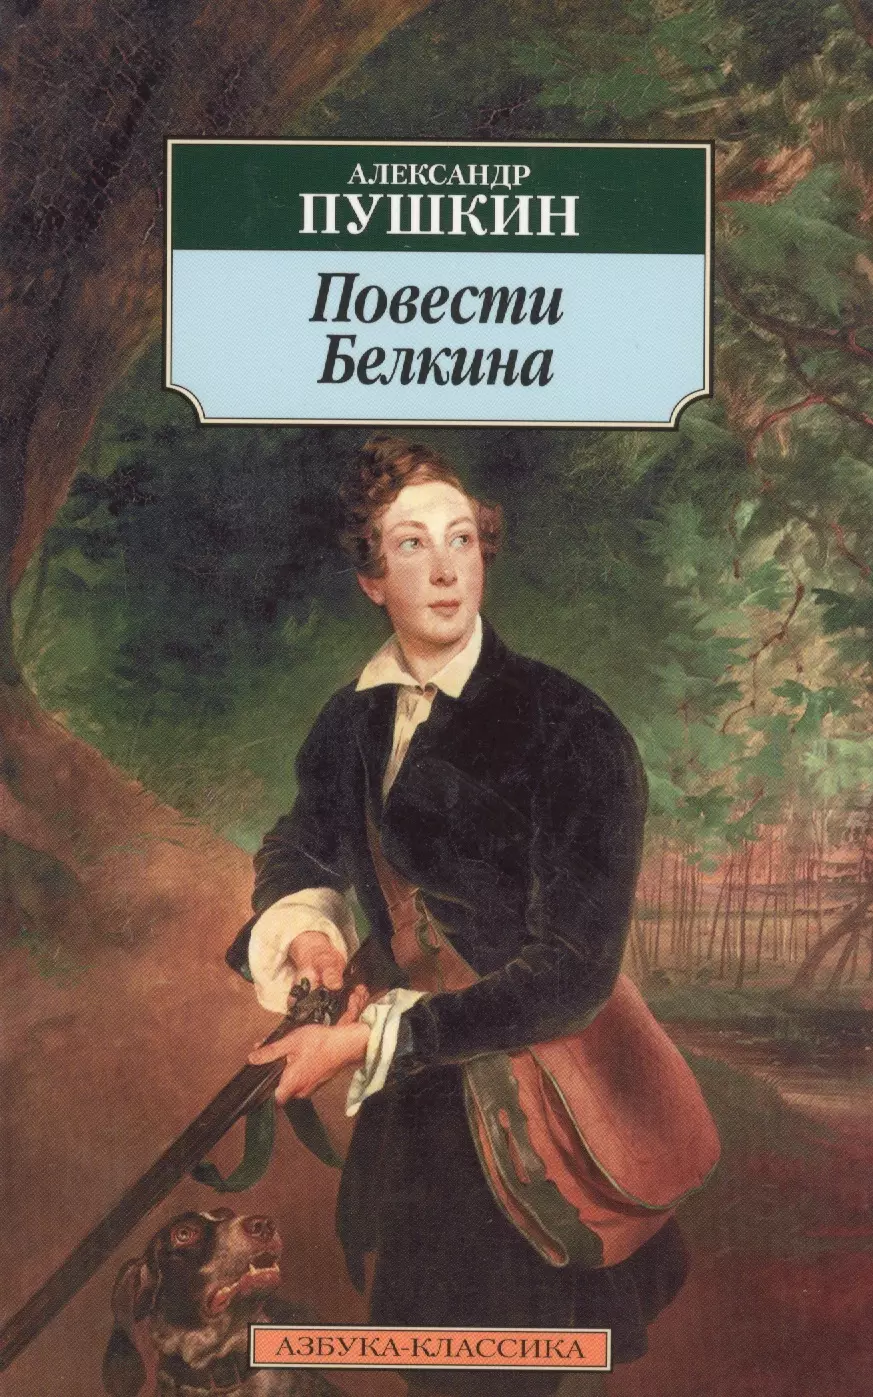 Белкин Пушкин